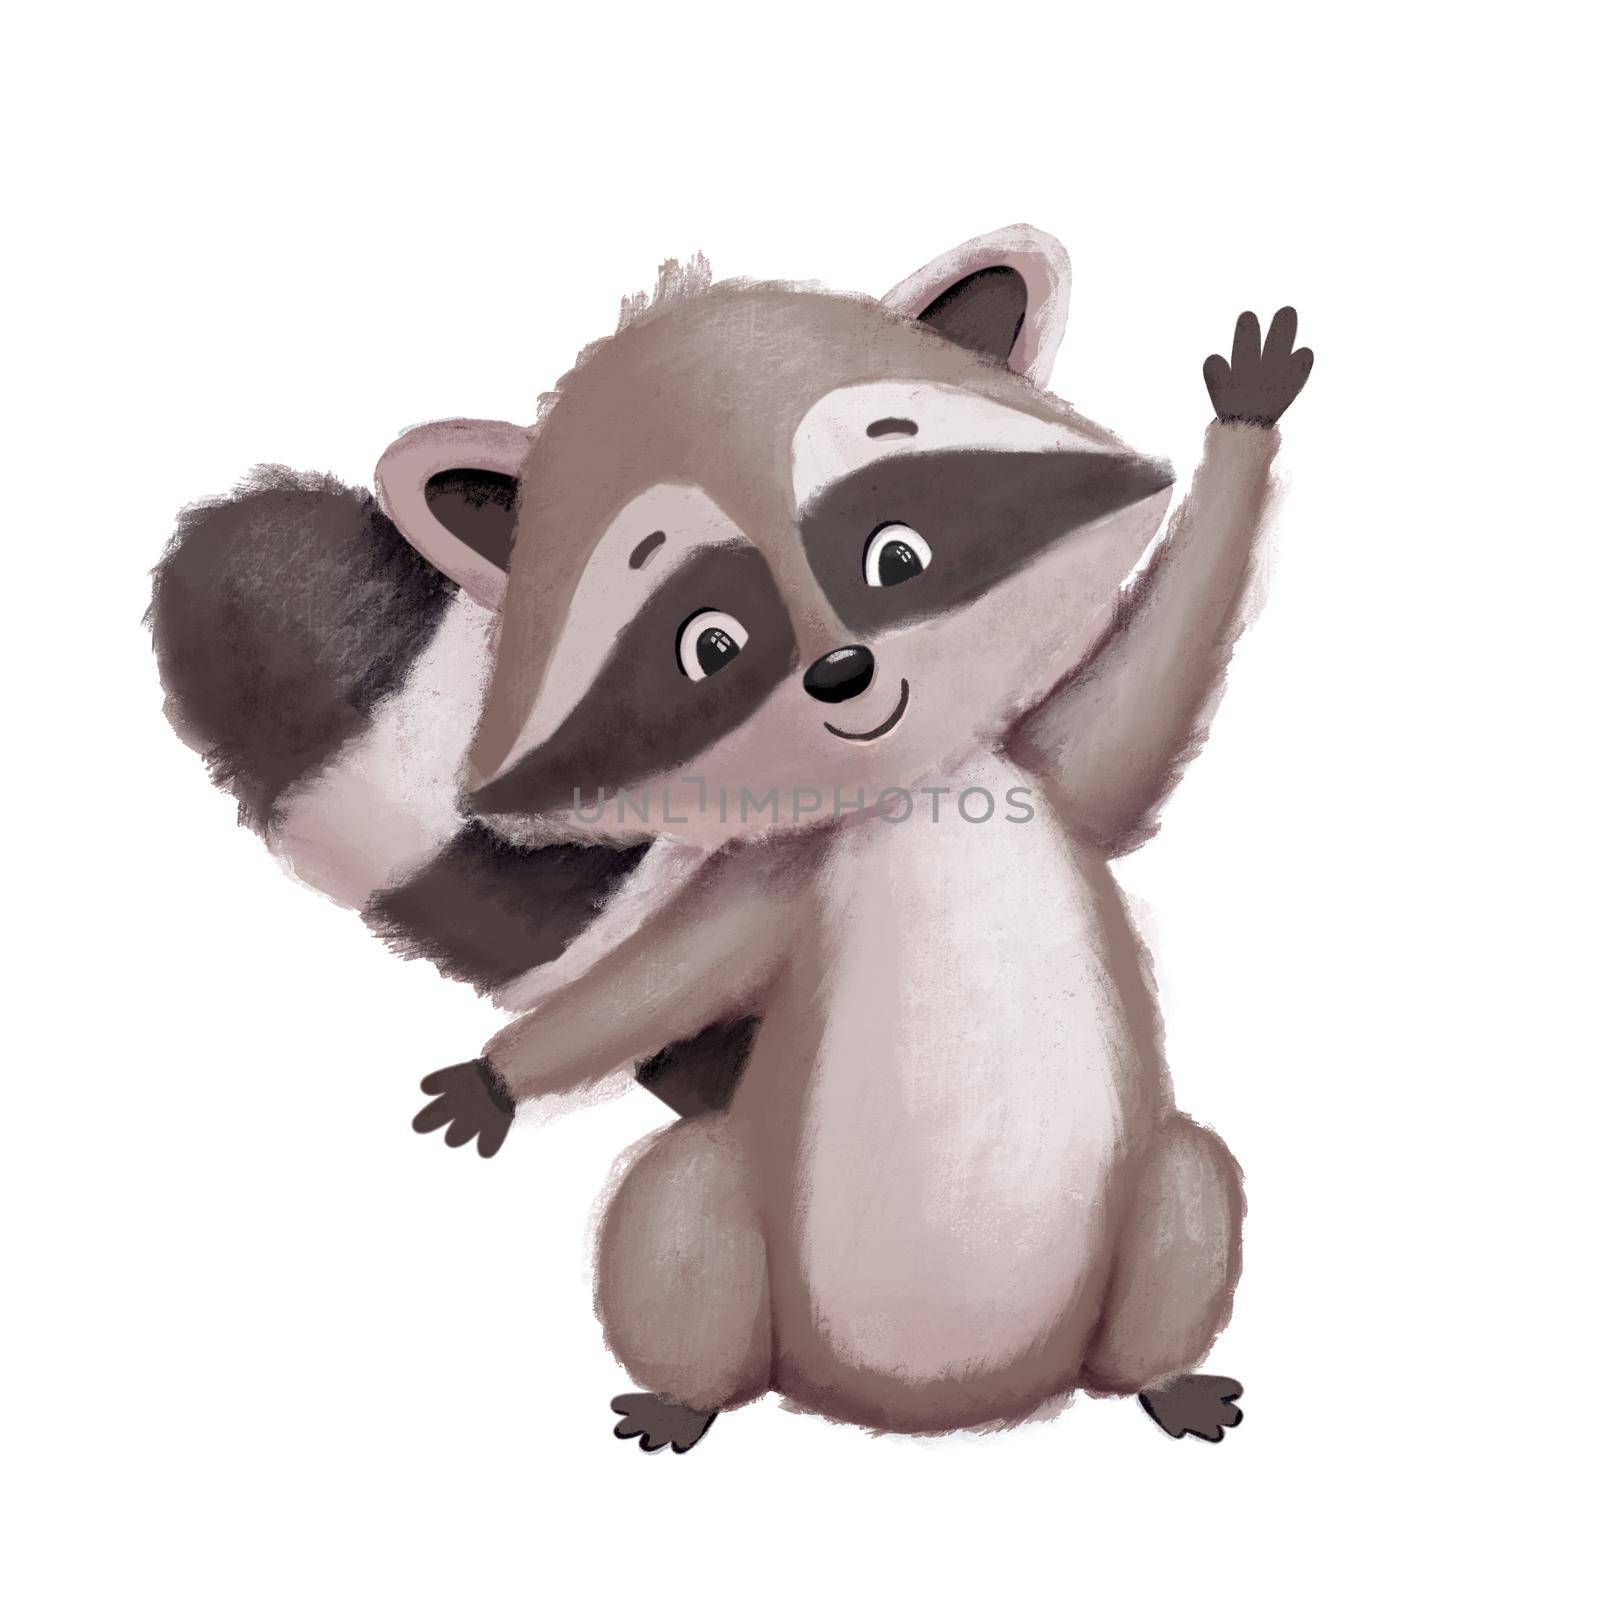 Funny cute cartoon raccoon waving hand. Hand drawn illustration of small raccoon character isolated on white by ElenaPlatova